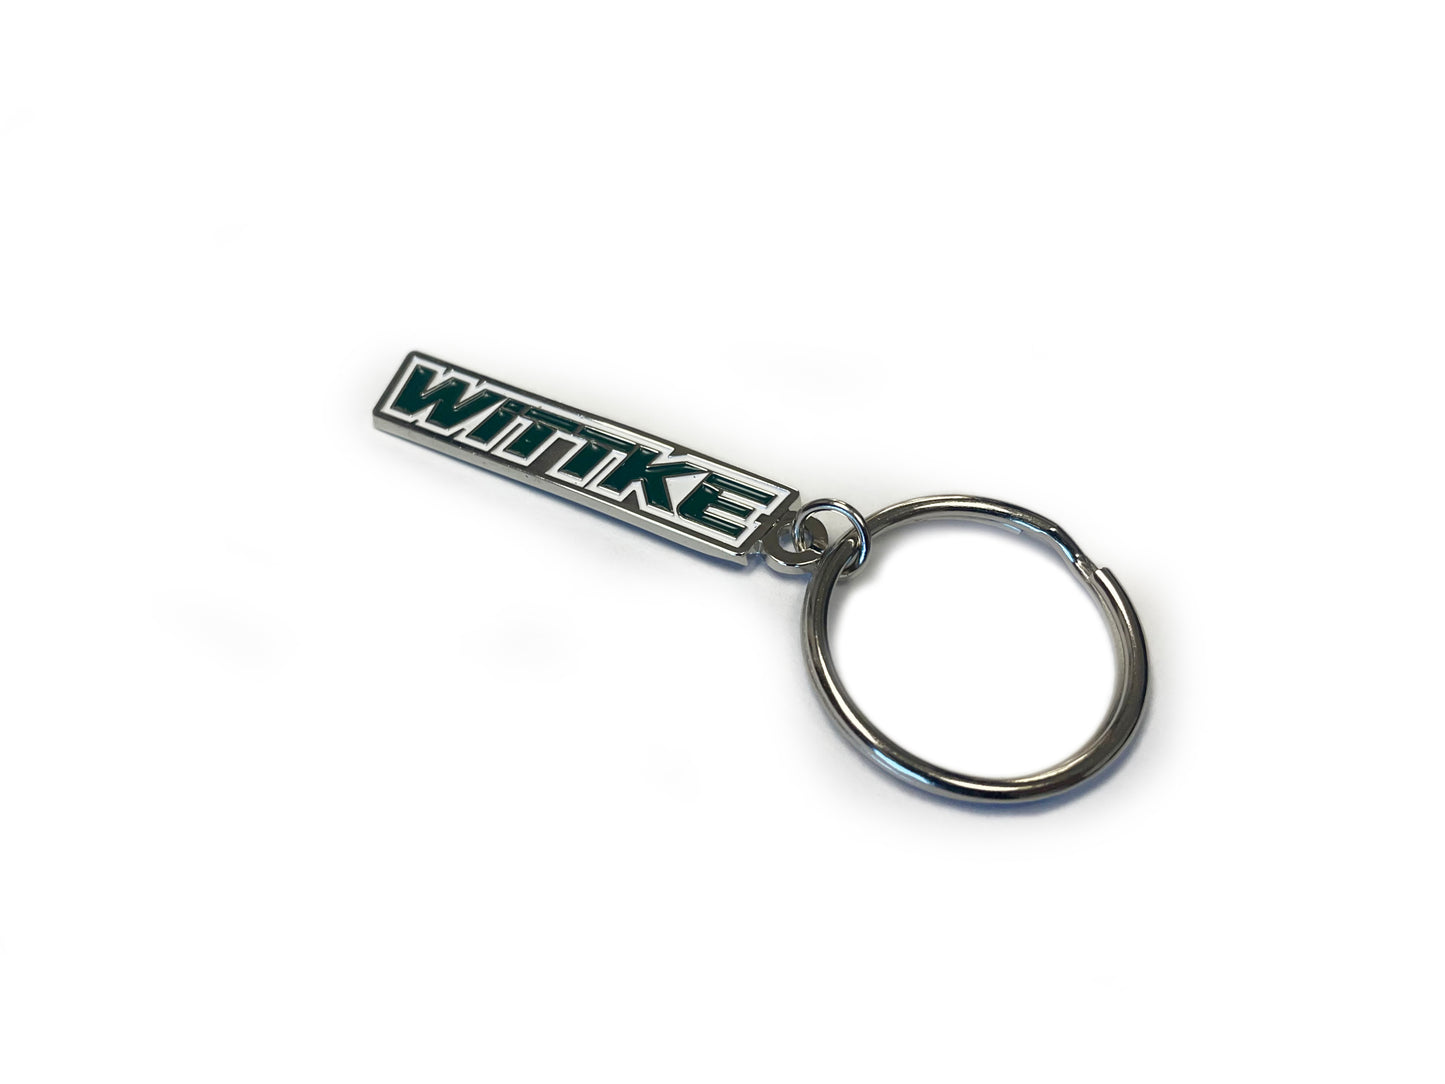 Wittke Truck Brand Keychains